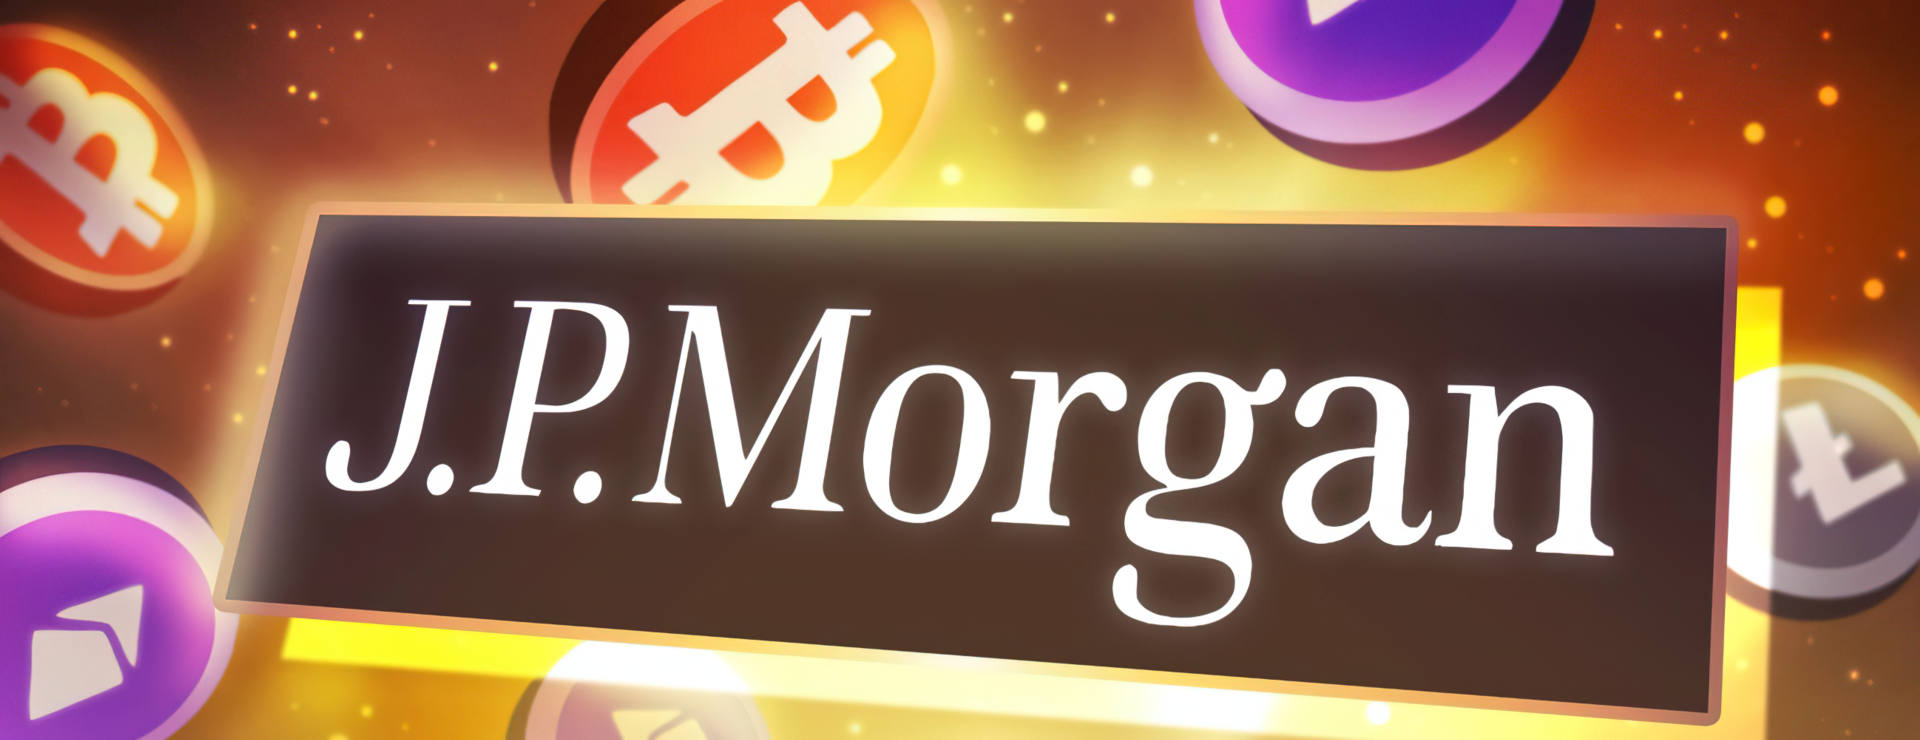 JP Morgan crypto wallet trademark approved